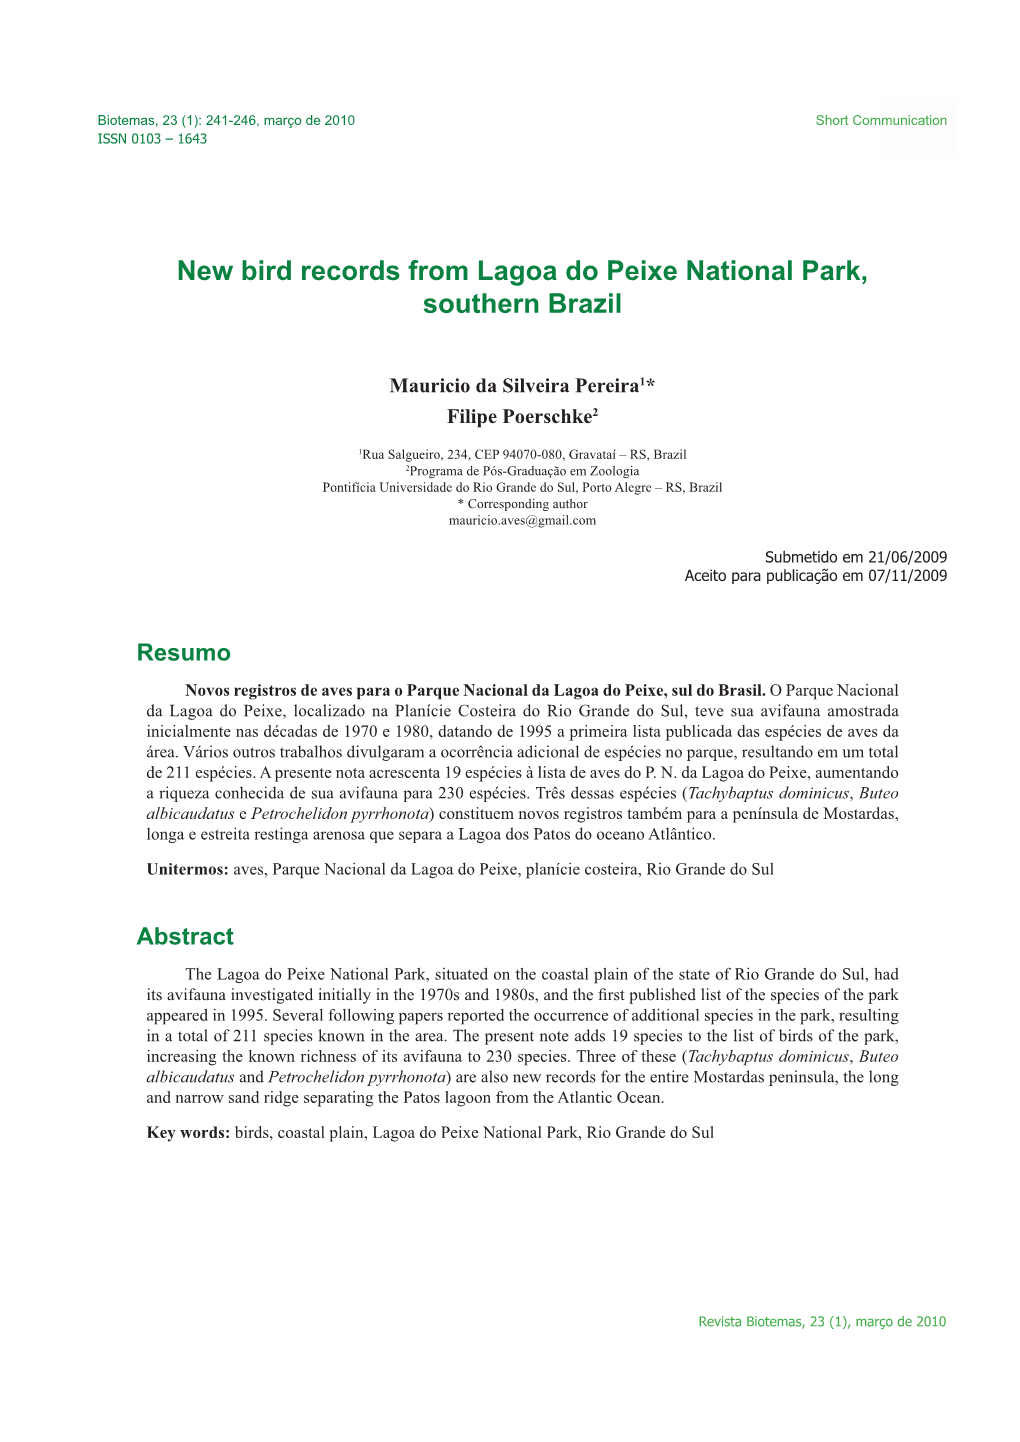 New Bird Records from Lagoa Do Peixe National Park, Southern Brazil